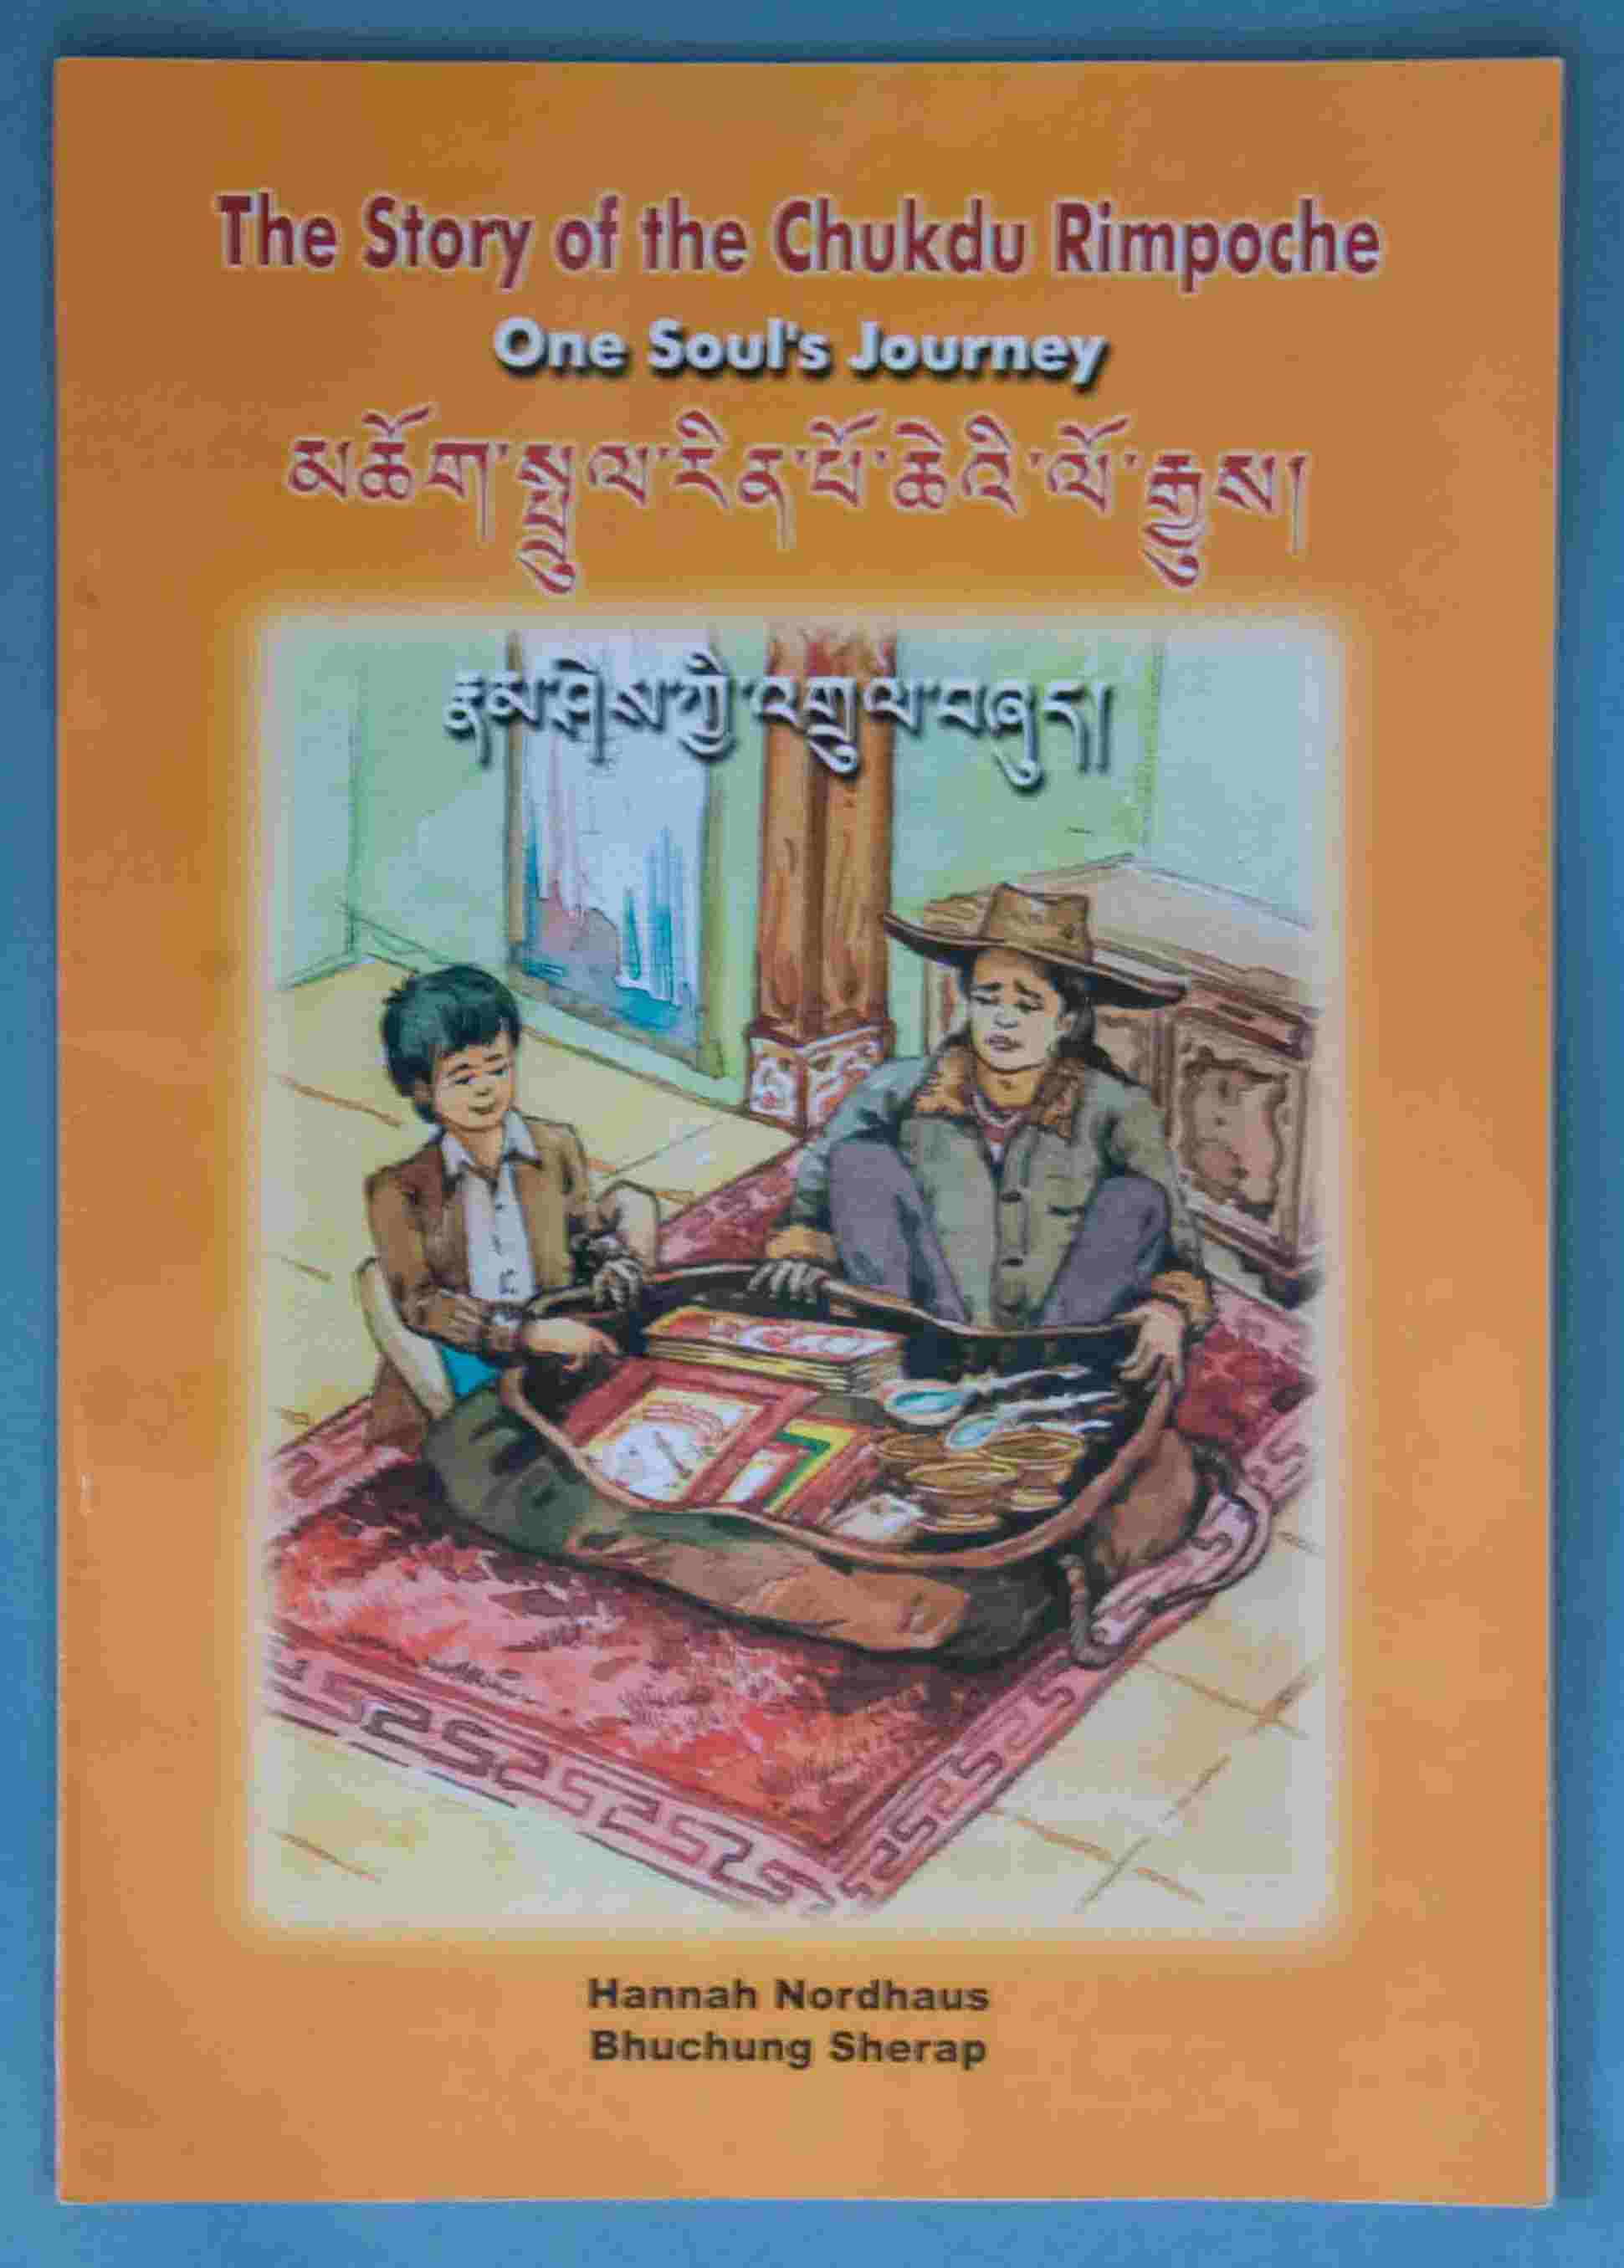 The story of the Chukdu Rimpoche